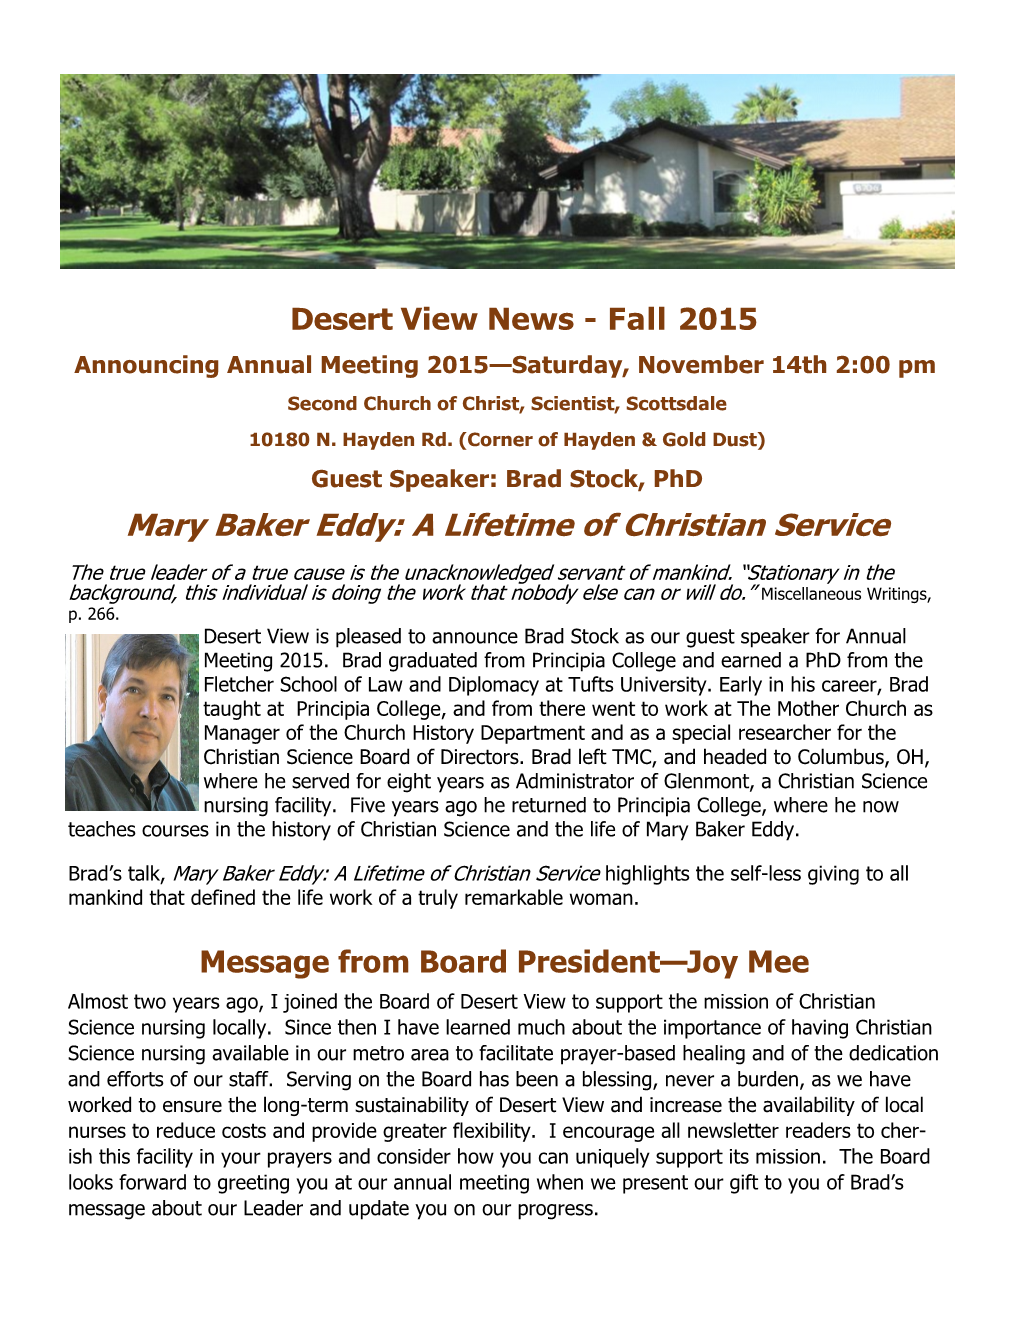 Mary Baker Eddy: a Lifetime of Christian Service